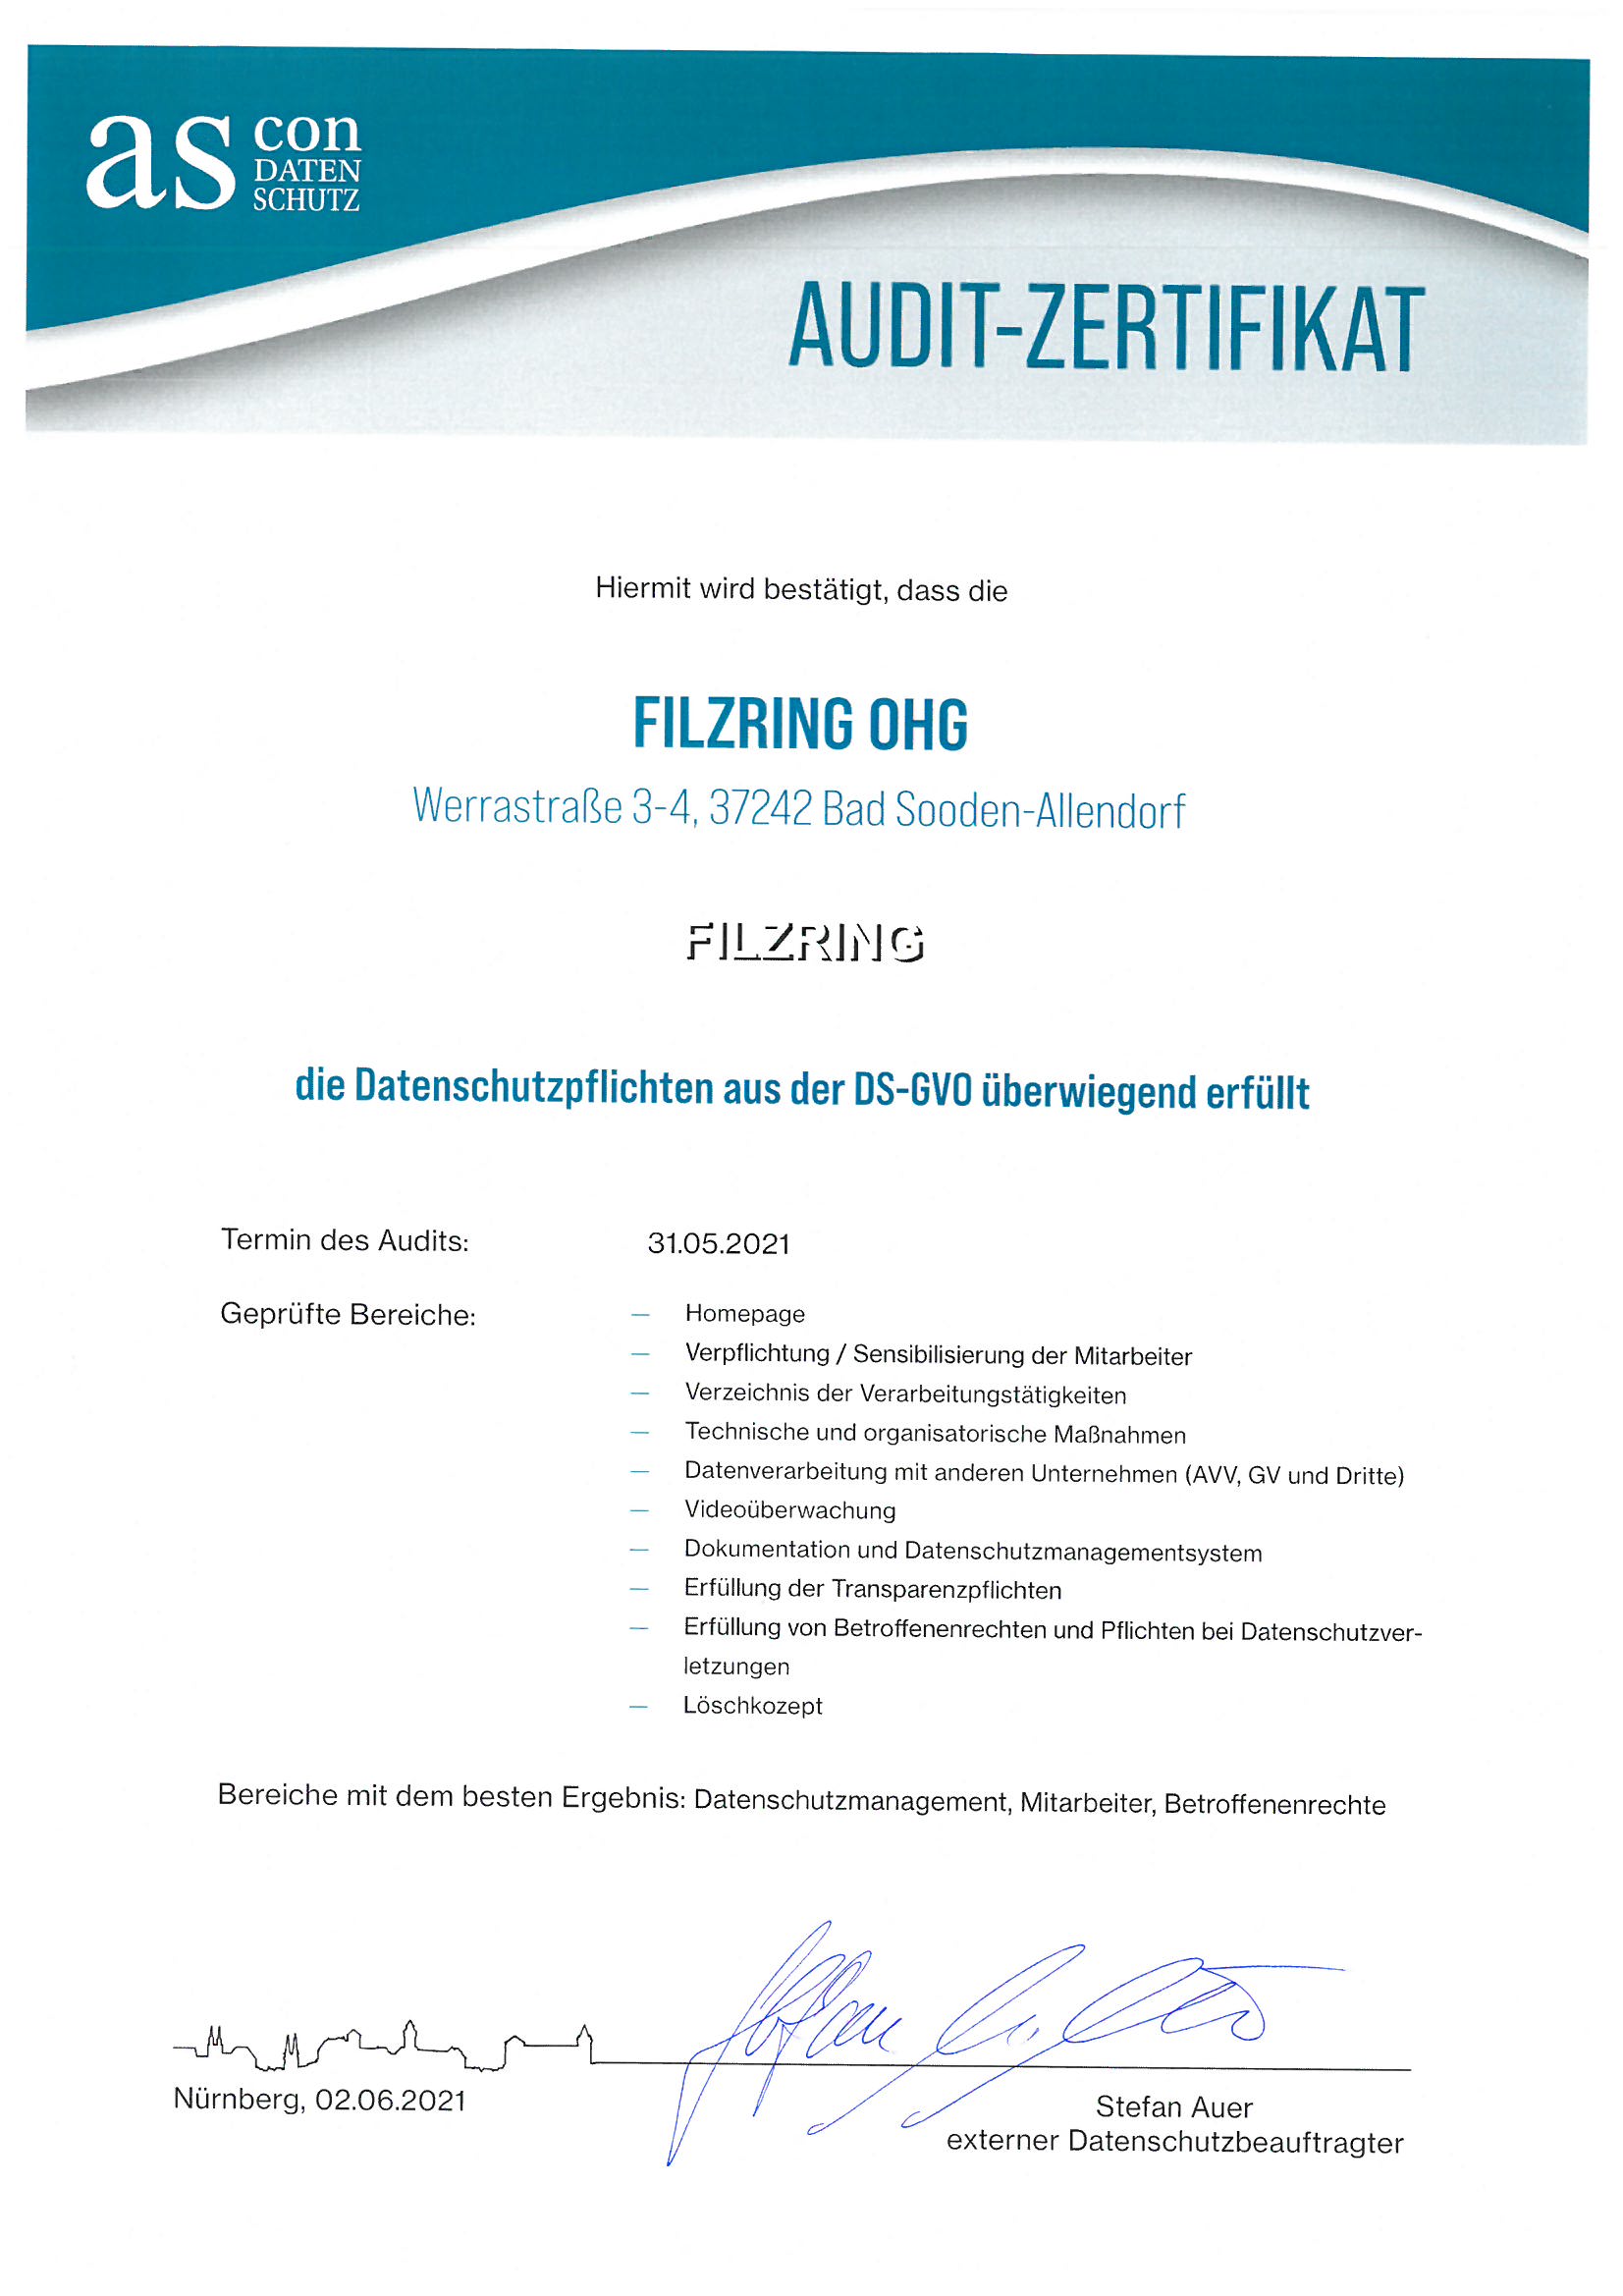 DS-GVO-Audit-Zertifikat-2021